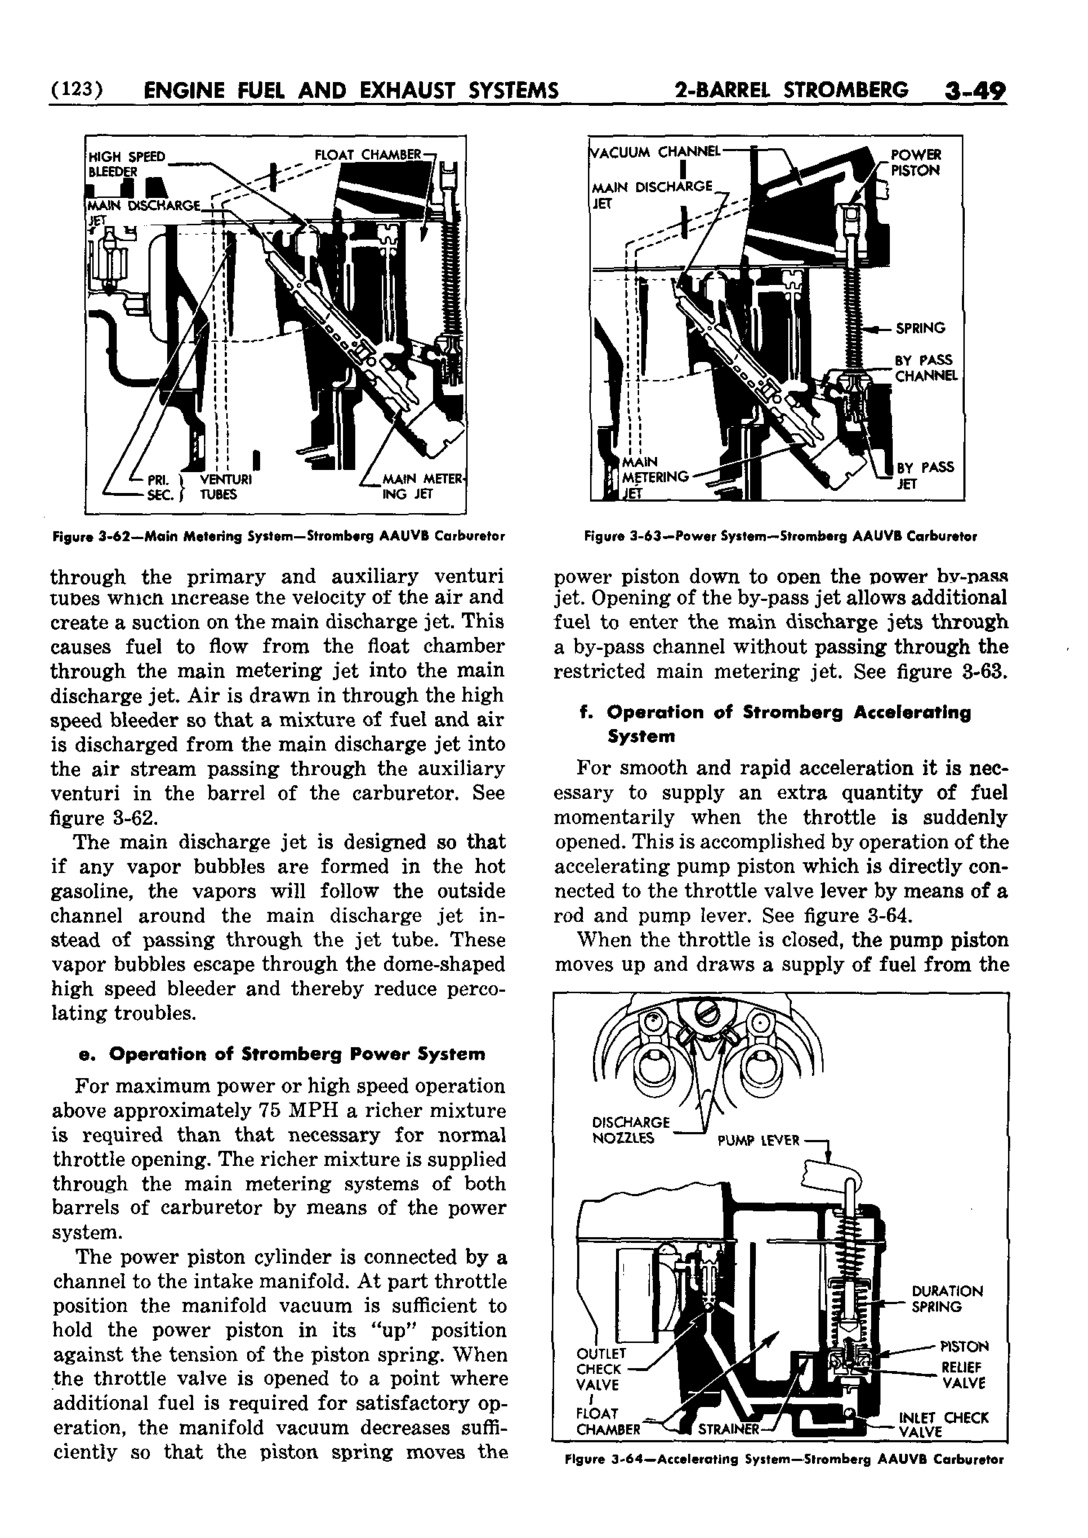 n_04 1952 Buick Shop Manual - Engine Fuel & Exhaust-049-049.jpg